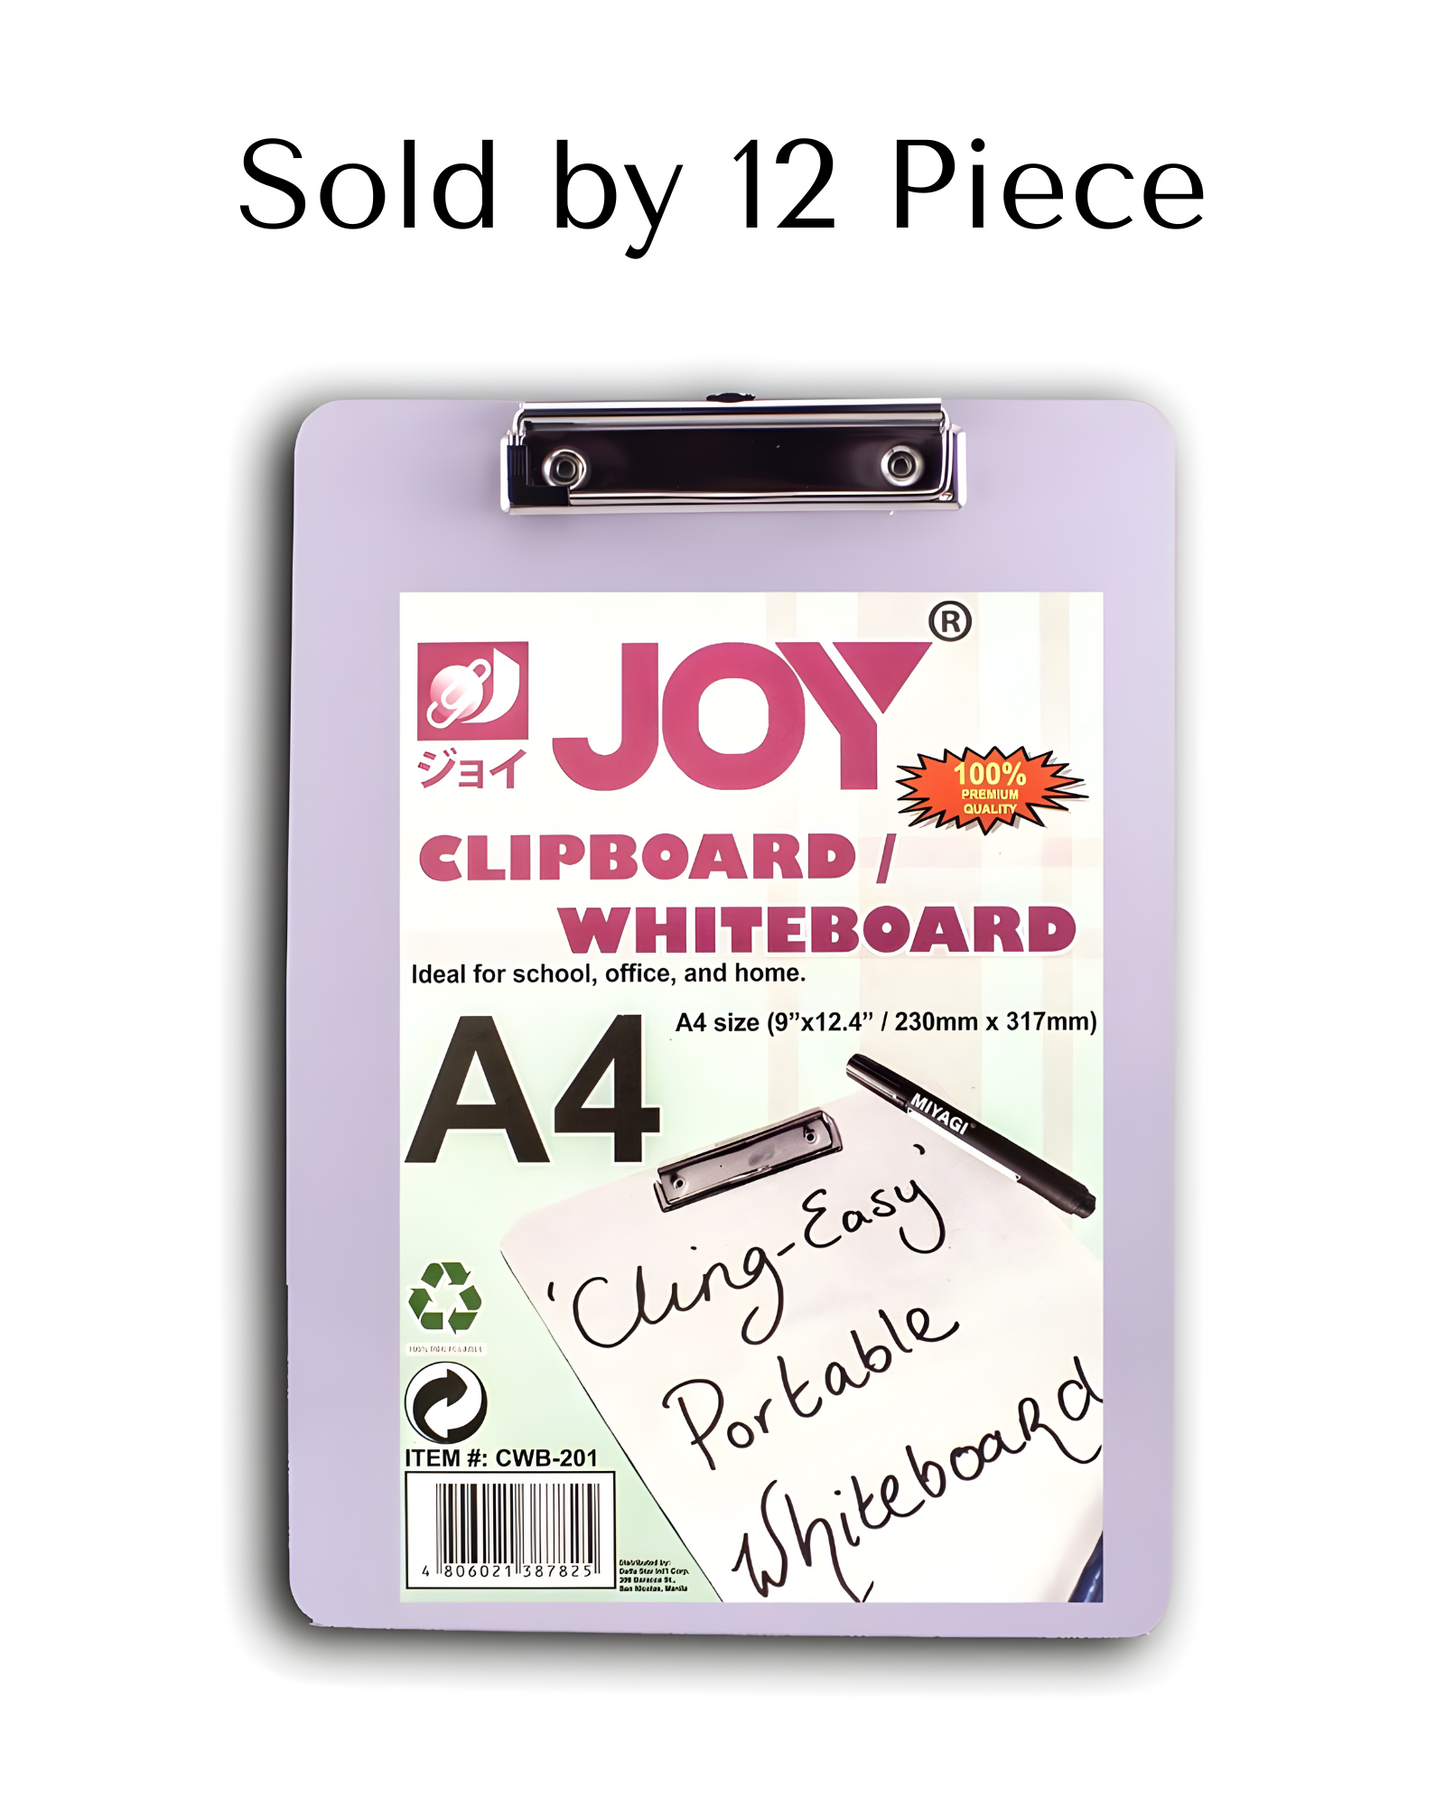 Joy Clipboard Whiteboard CWB201 A4 (12pcs)